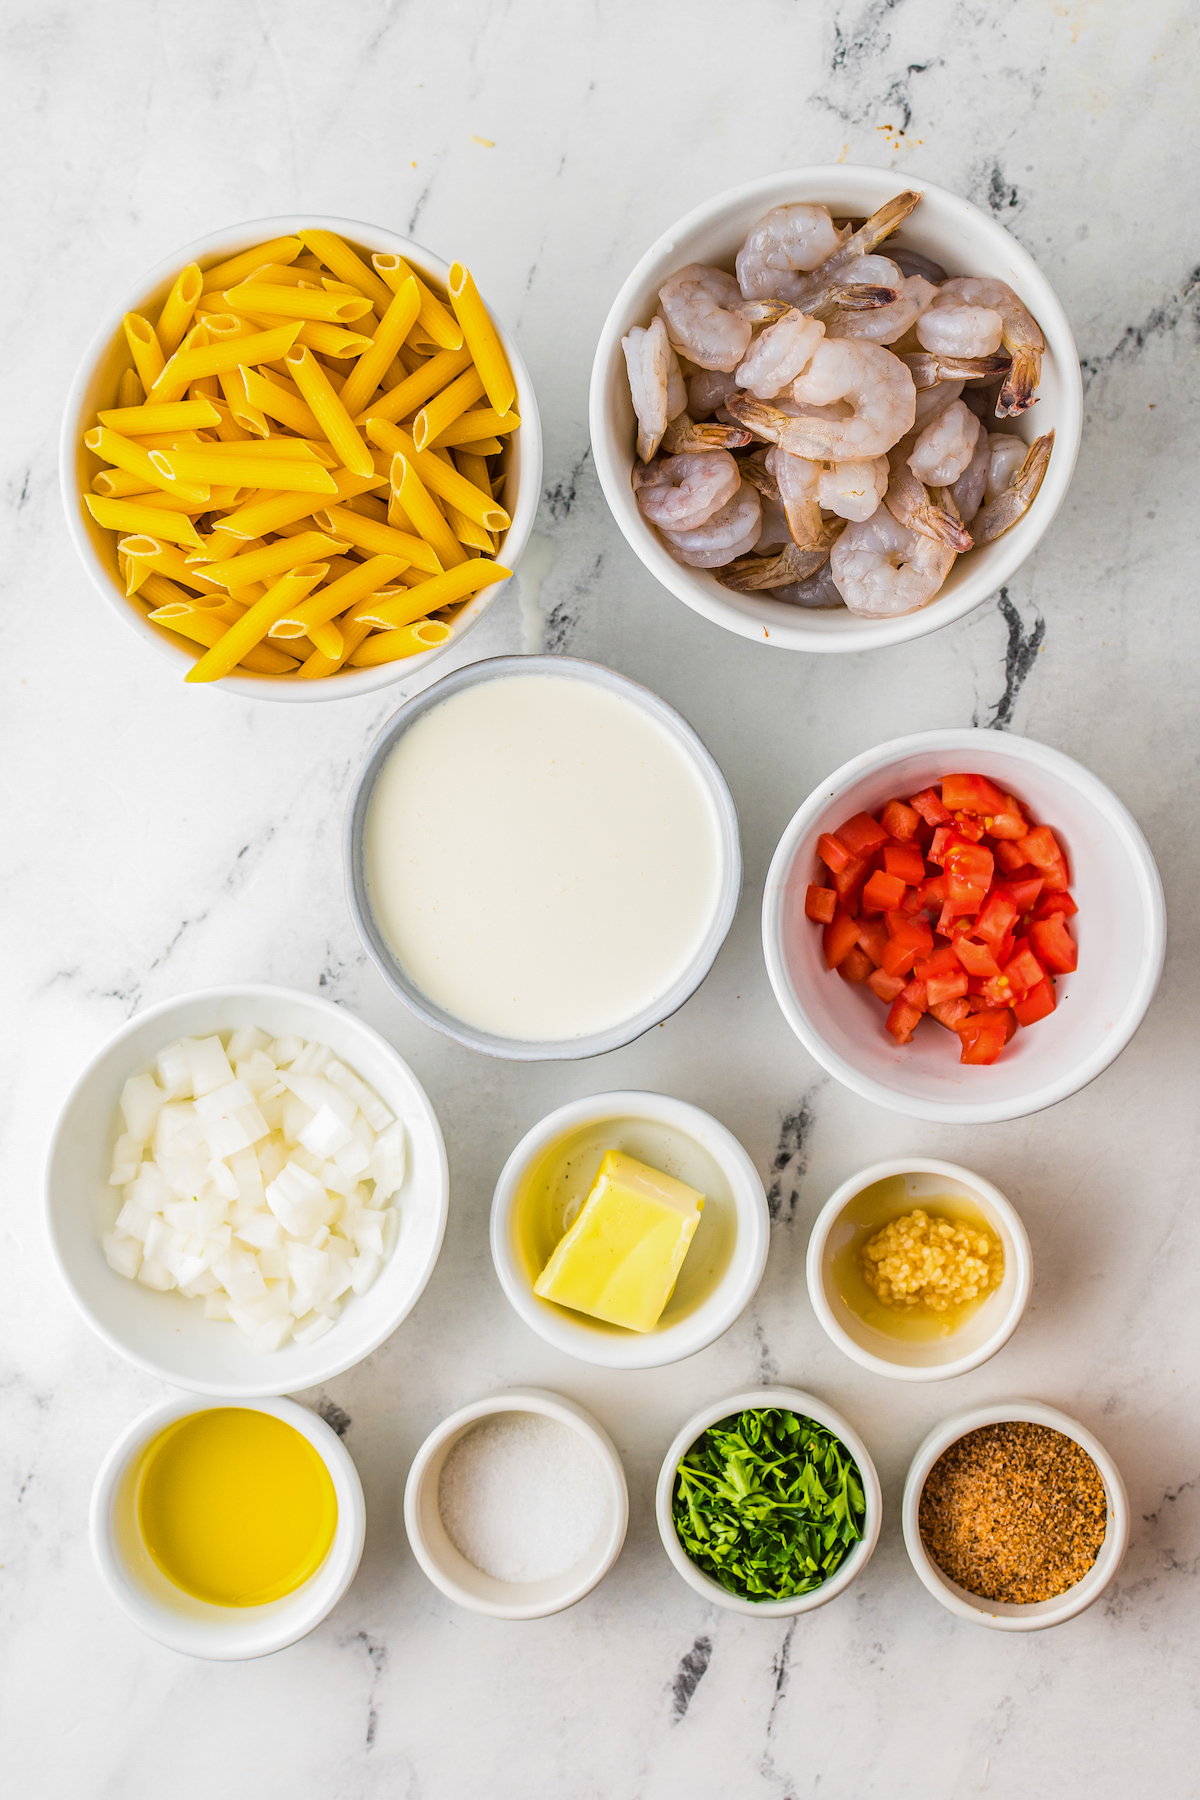 From top left: Dry penne pasta, raw shrimp, heavy cream, diced tomato, diced onion, butter, garlic, olive oil, salt, parsley, cajun seasoning.